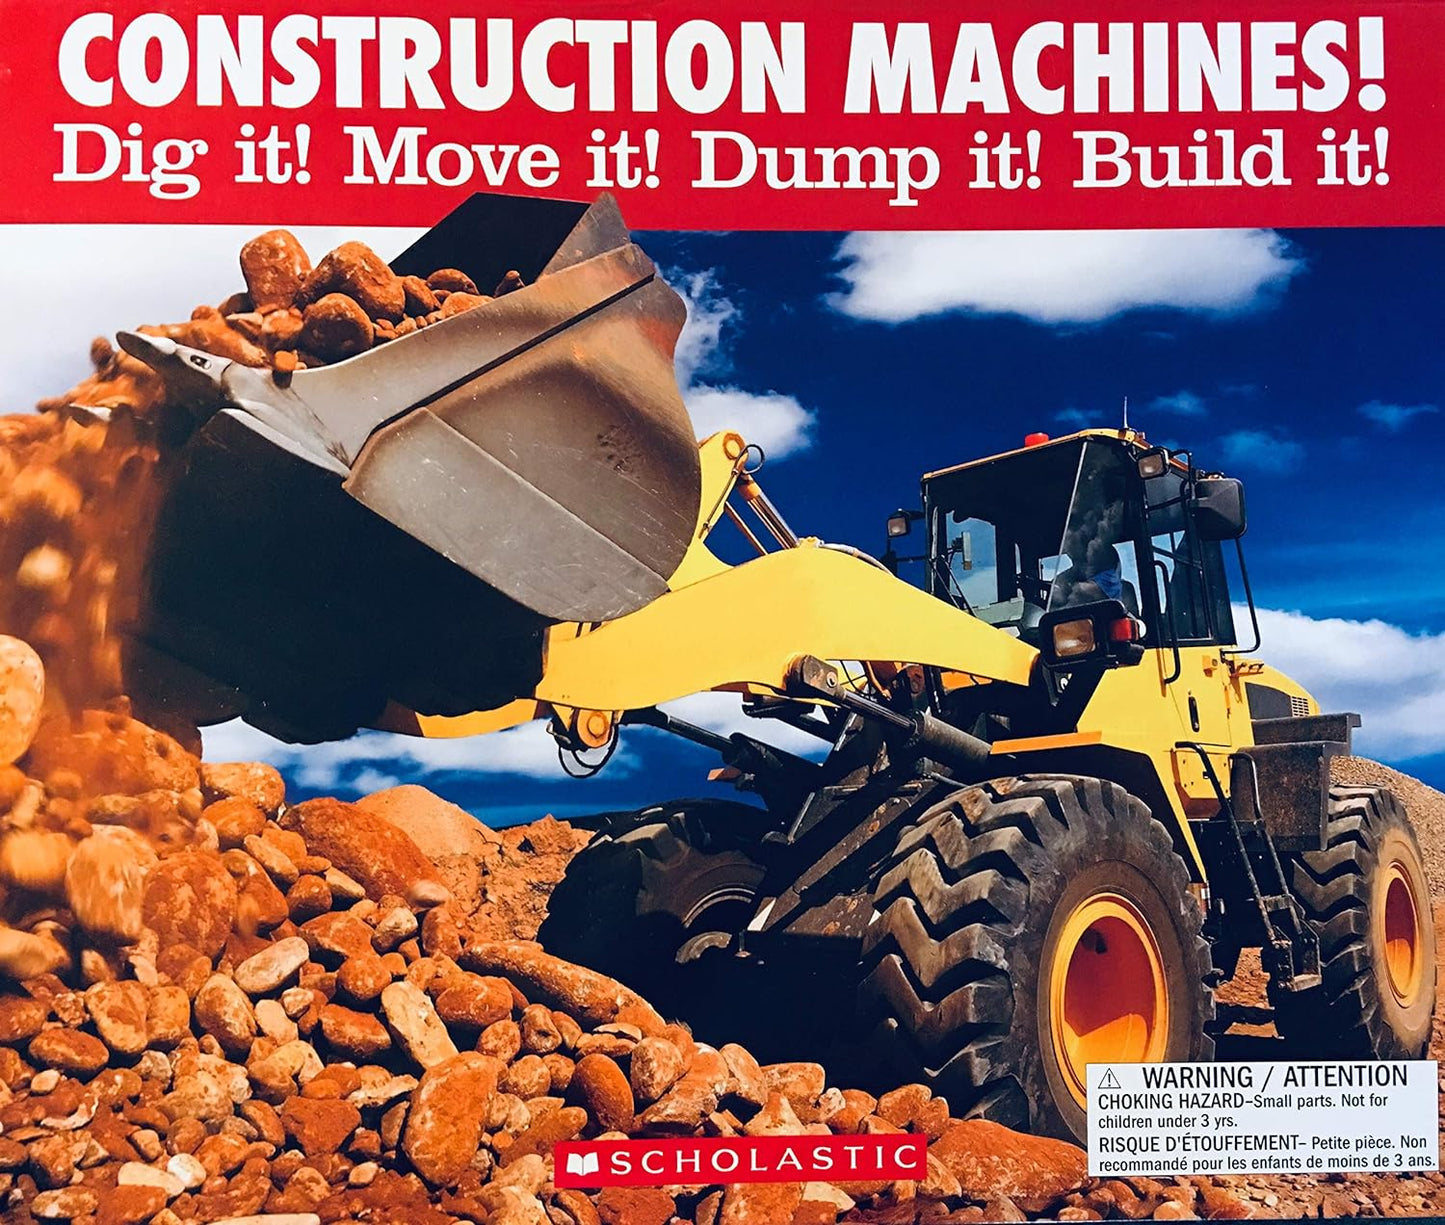 Construction Machines!